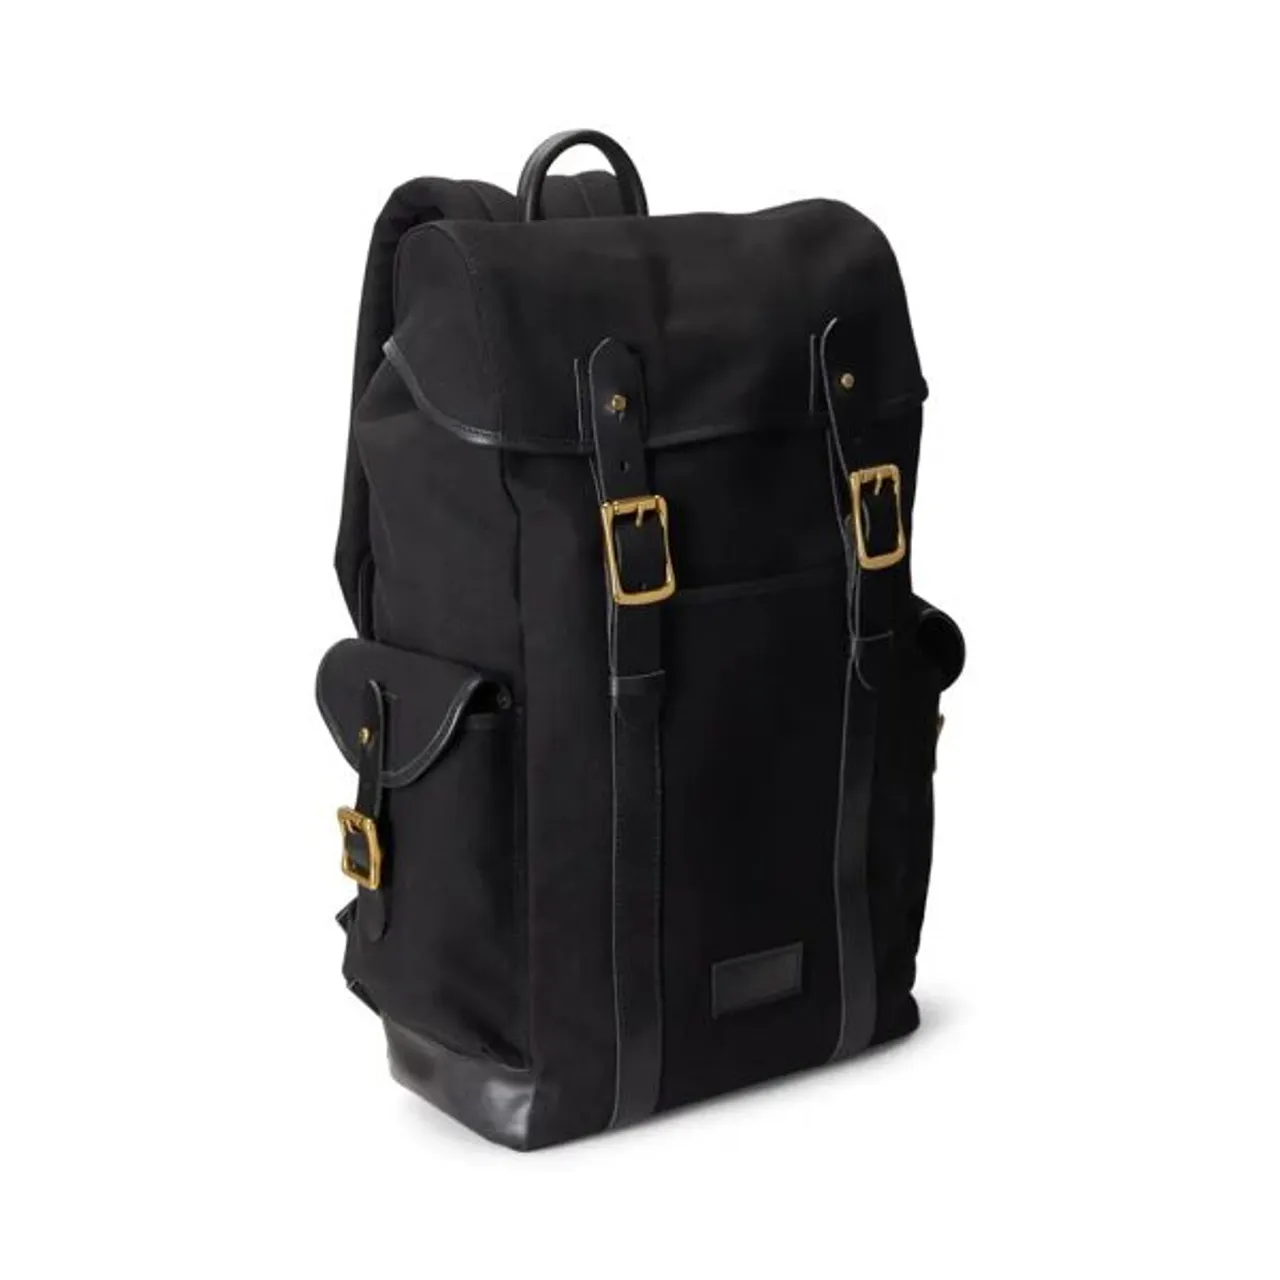 Ralph Lauren Pebbled Leather Backpack - Black/Black - Unisex